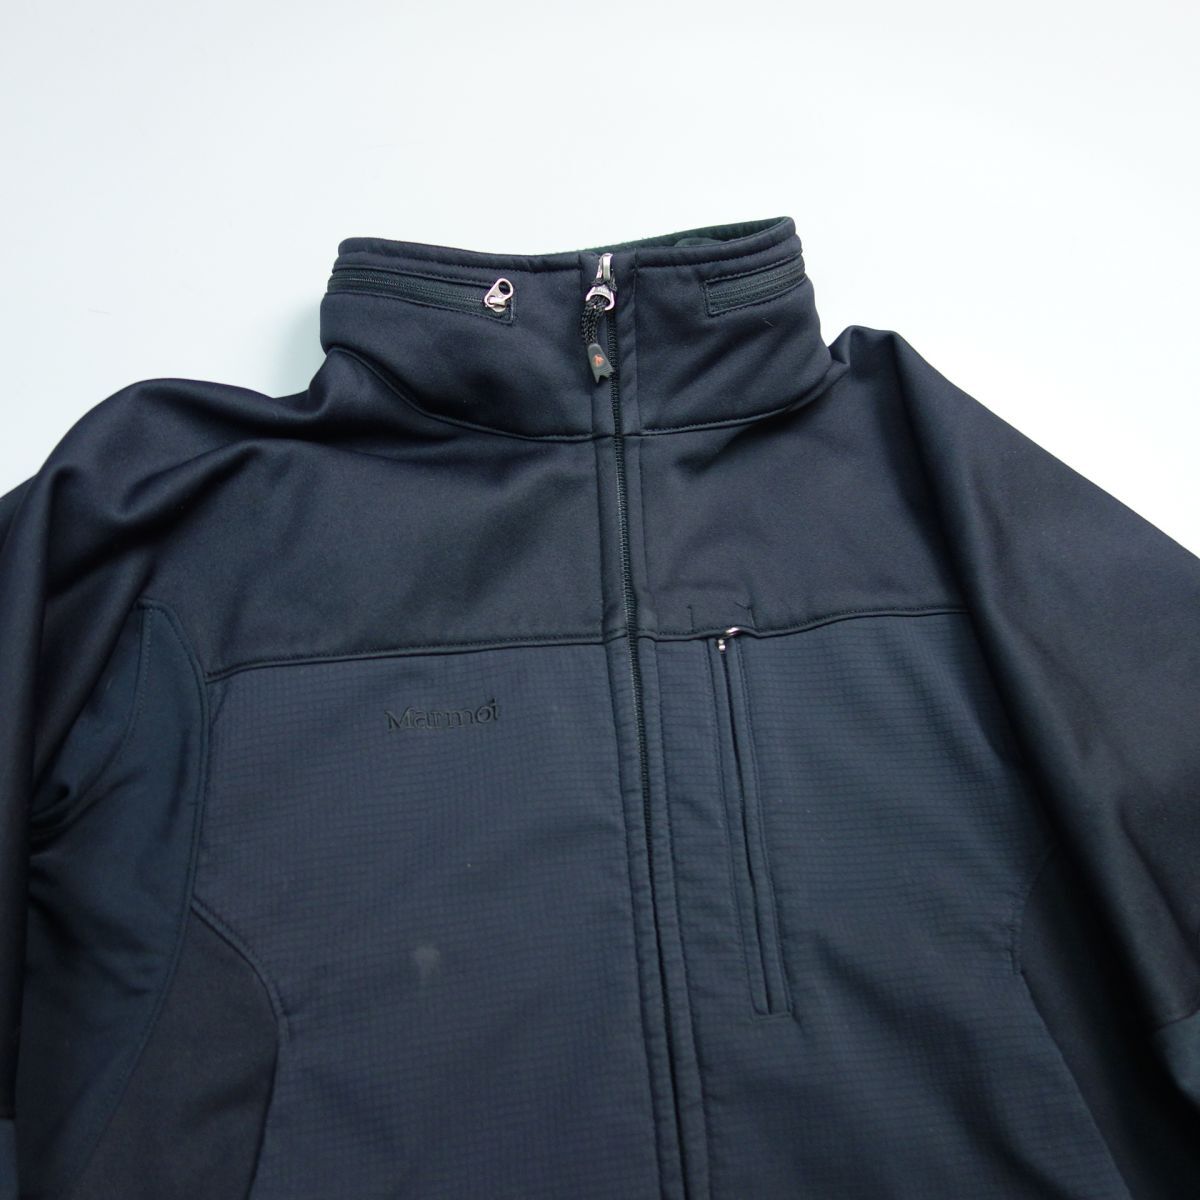  Marmot Marmot Wind stopper soft shell Zip up jacket black men's M outdoor 